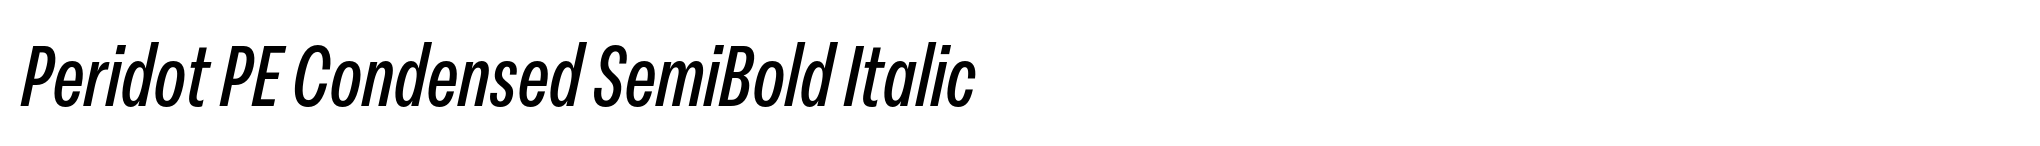 Peridot PE Condensed SemiBold Italic image